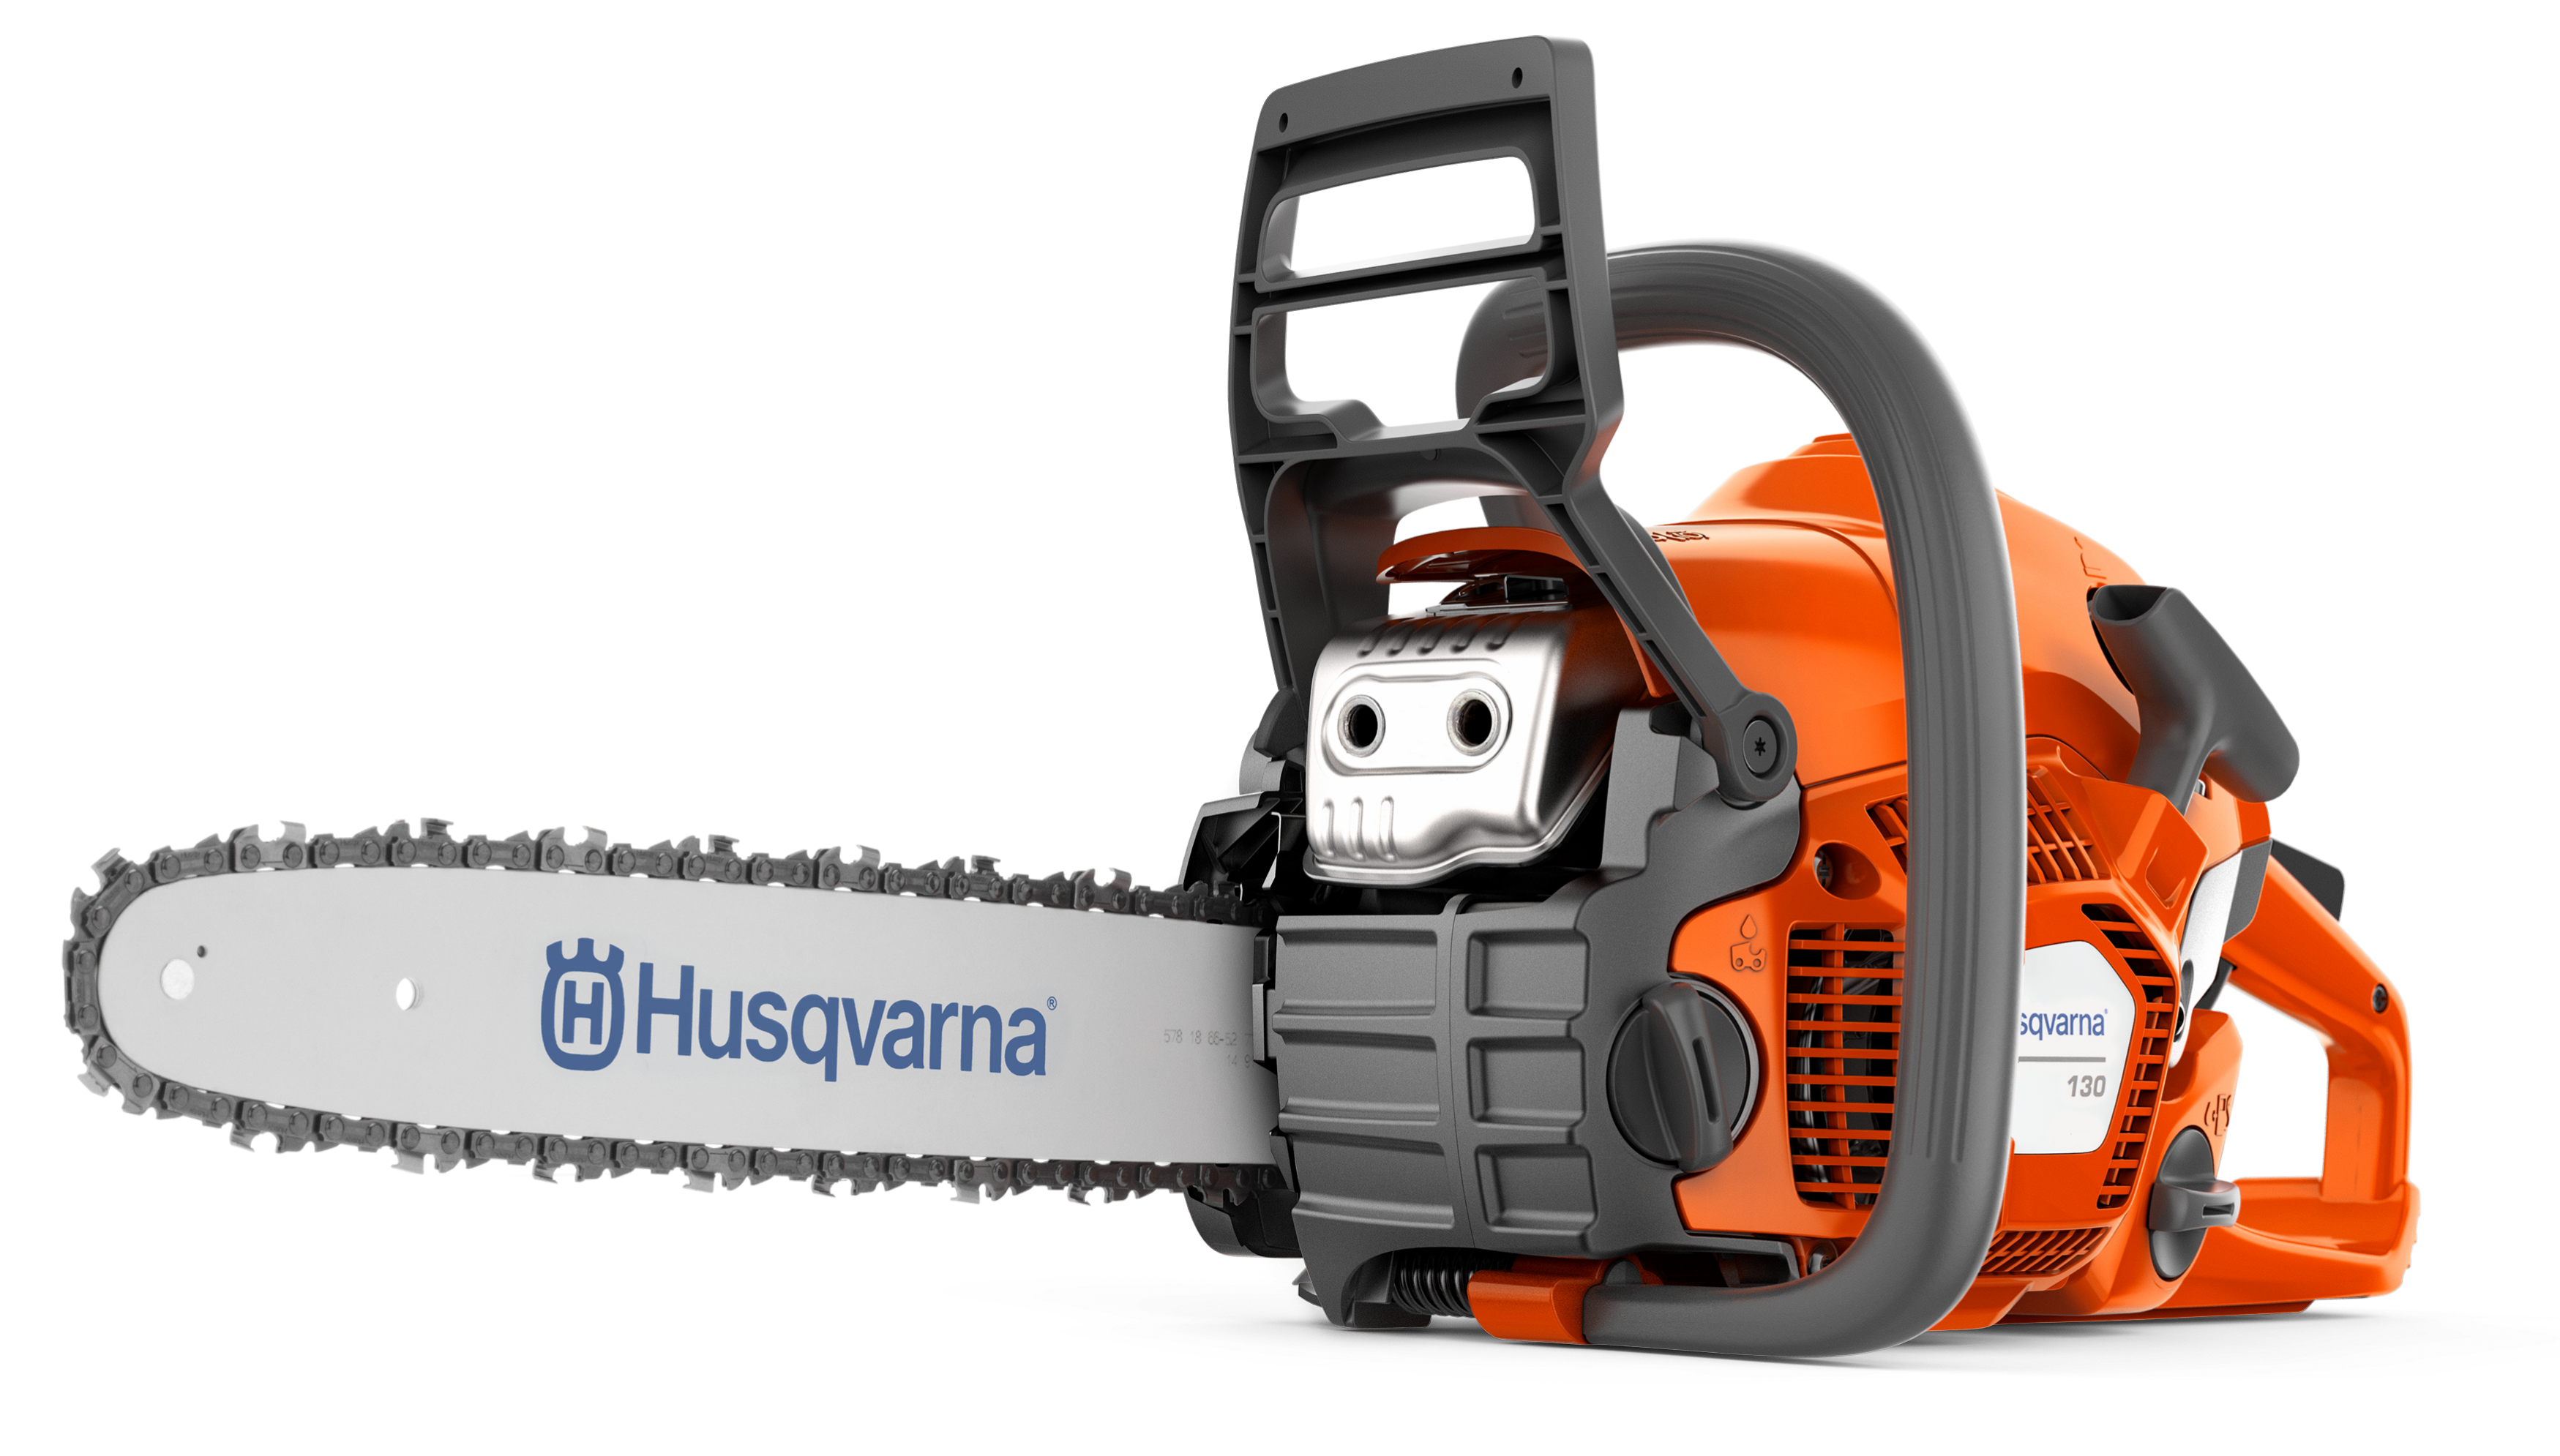 Husqvarna 130 Chainsaw (Occasional Use)